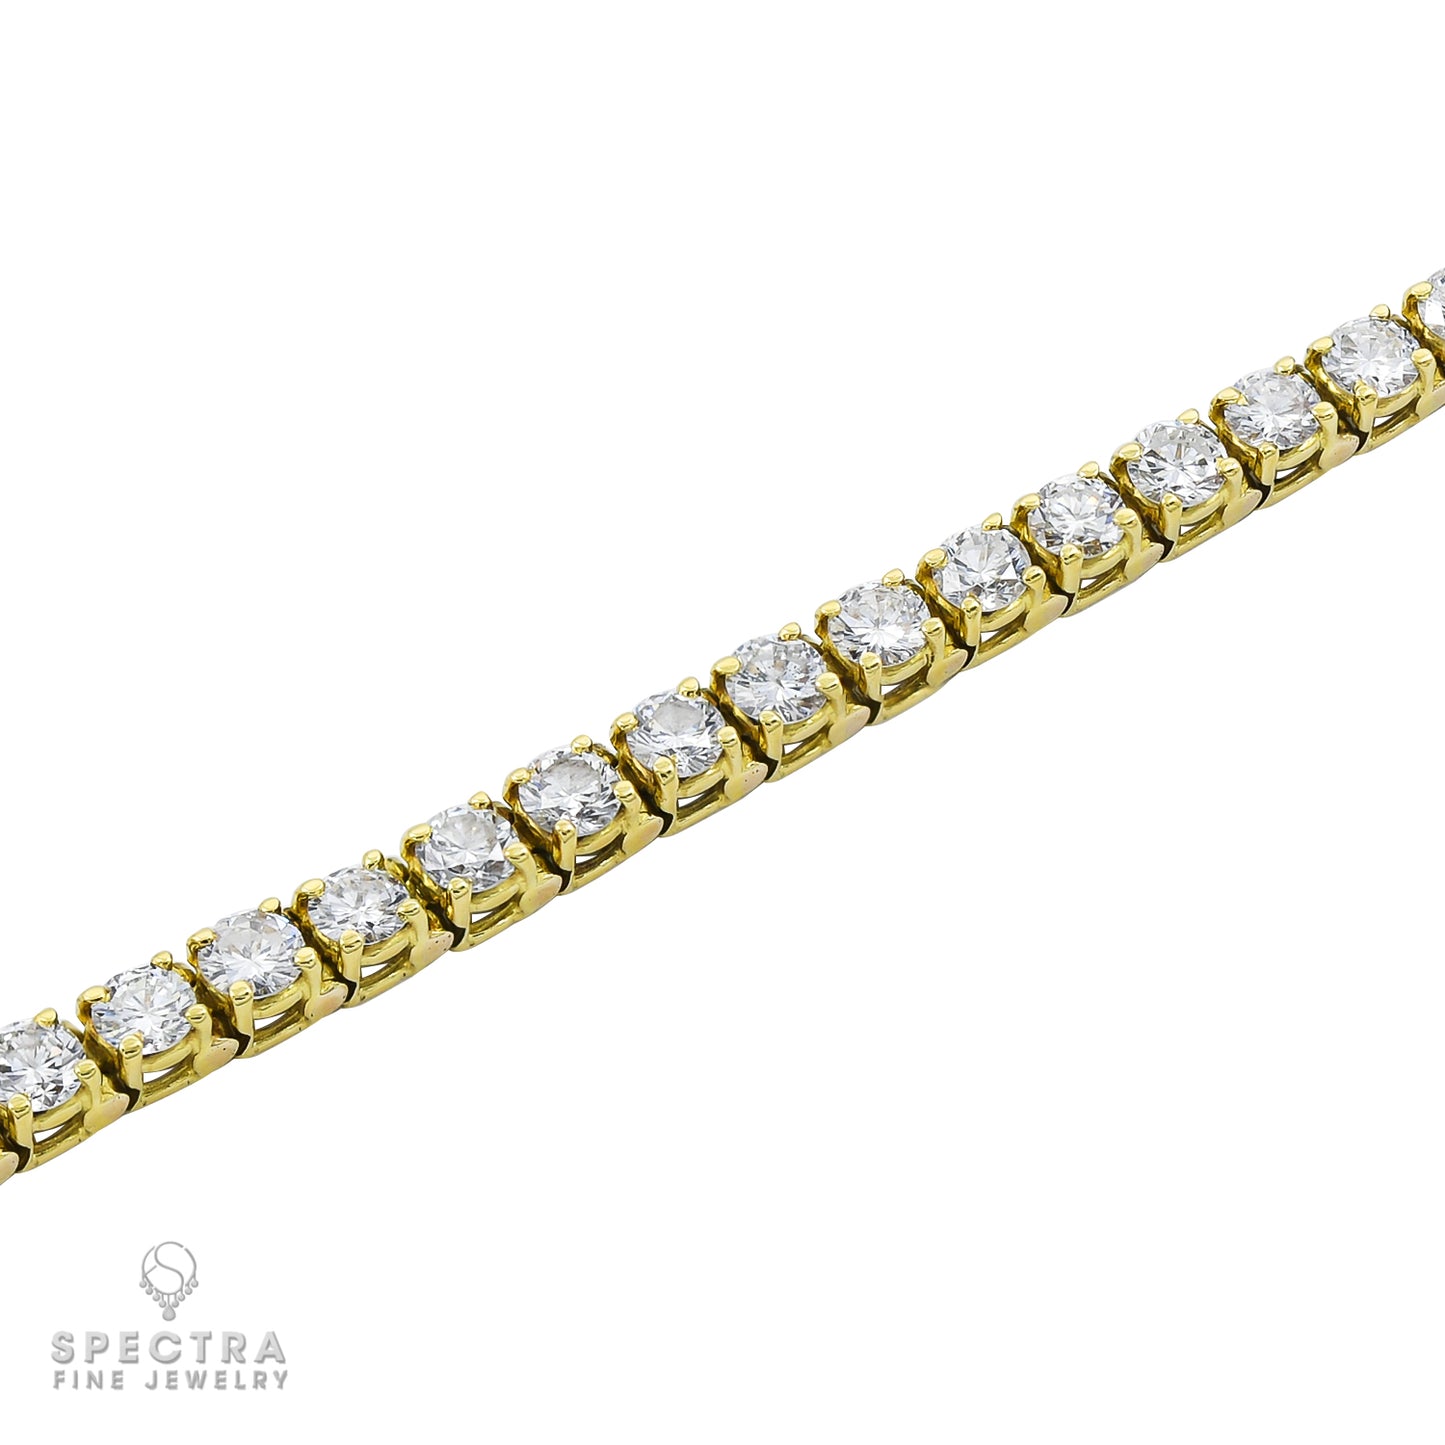 Spectra Fine Jewelry 6.60 cts. Diamond Tennis Bracelet